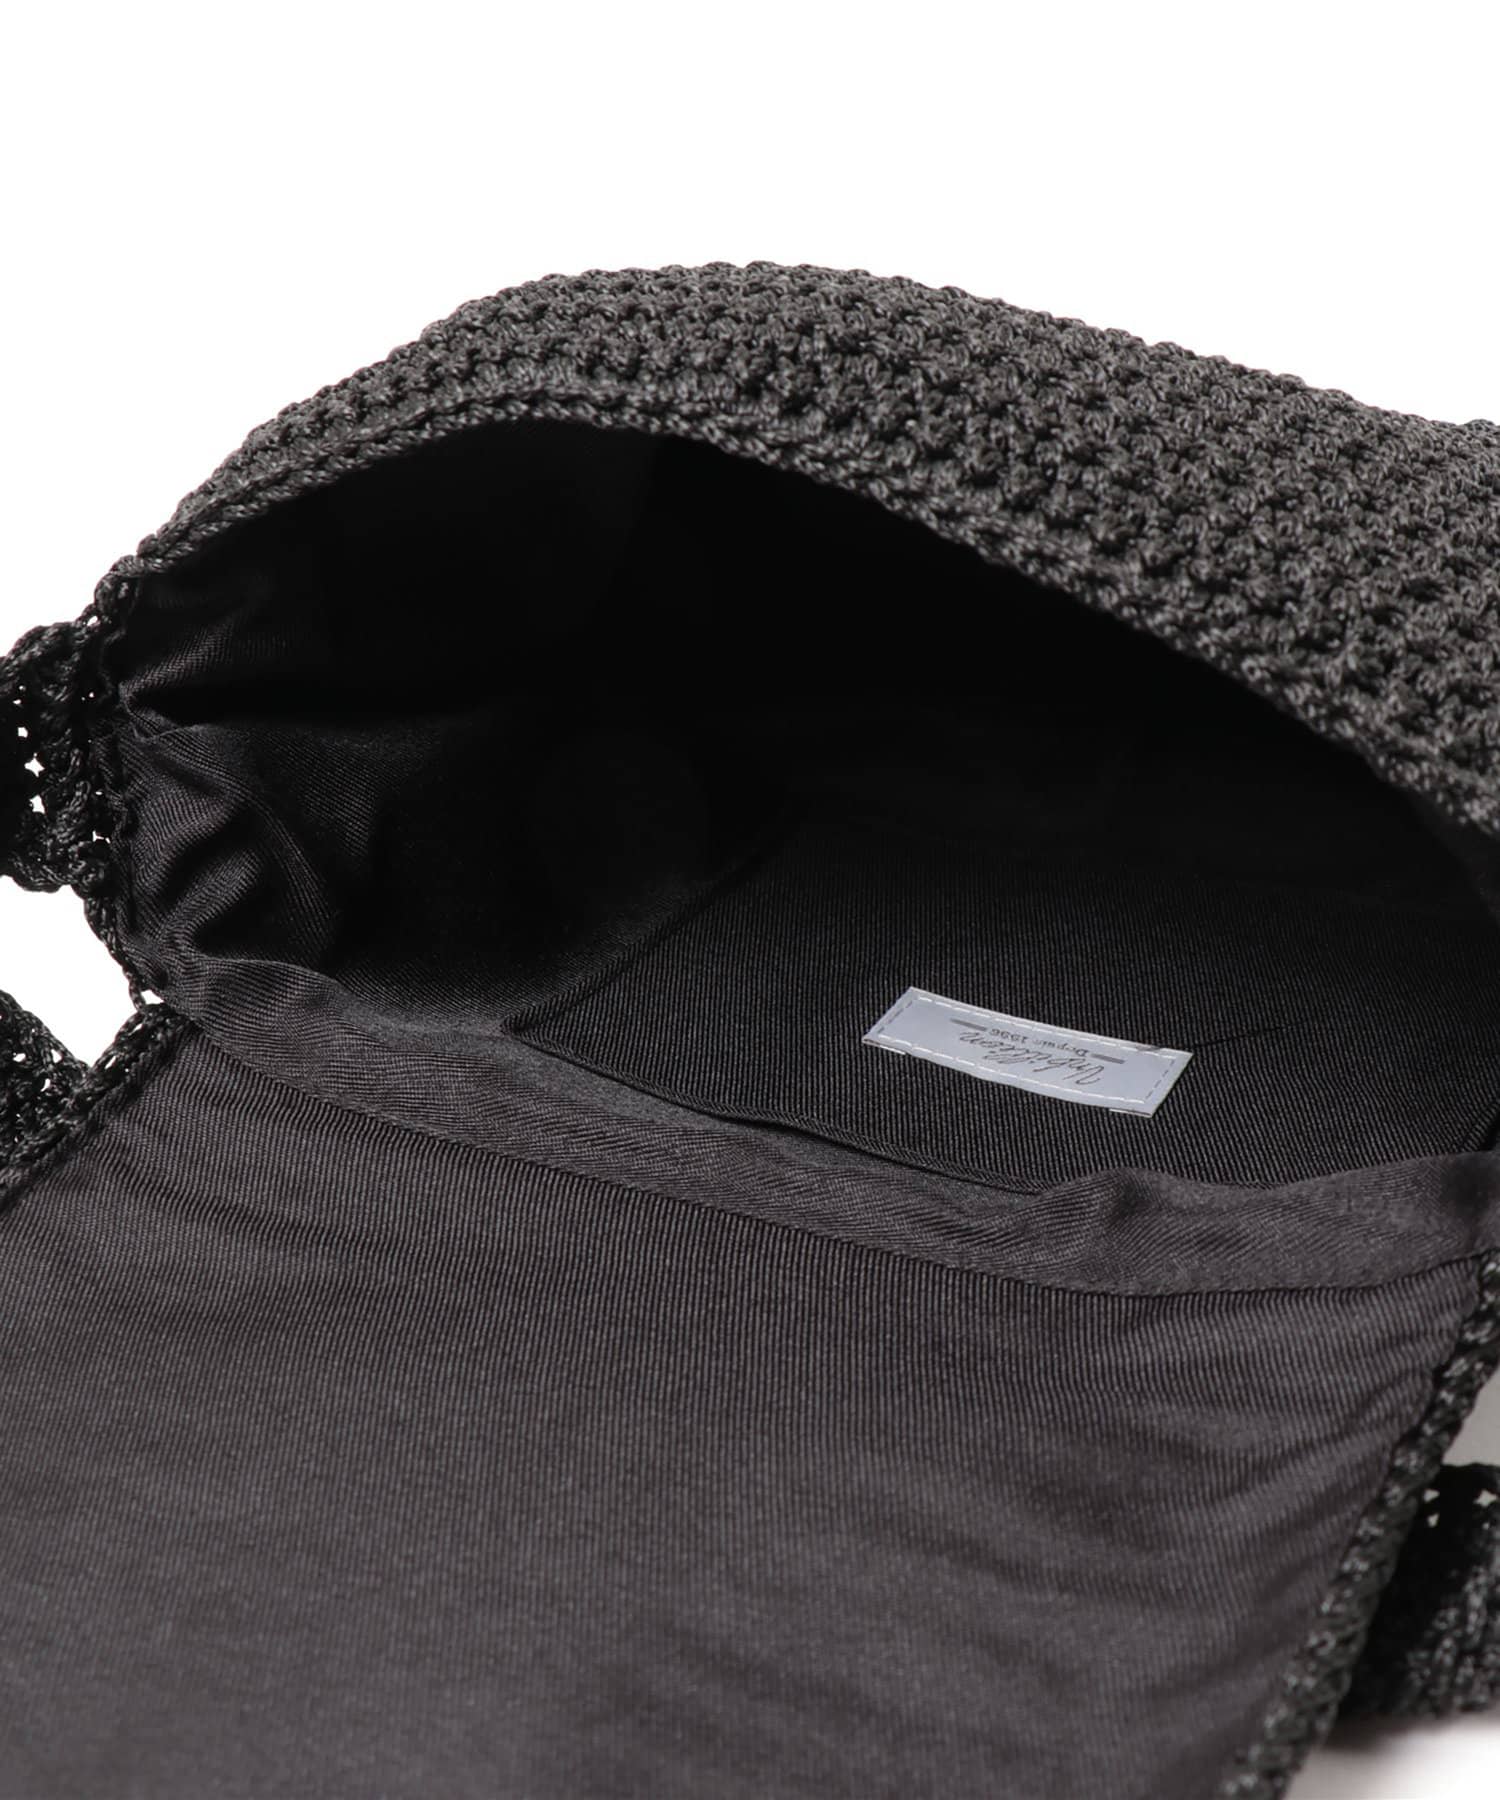 natural couture(ナチュラルクチュール) 差込金具ワンハンドル手編みトートバッグ